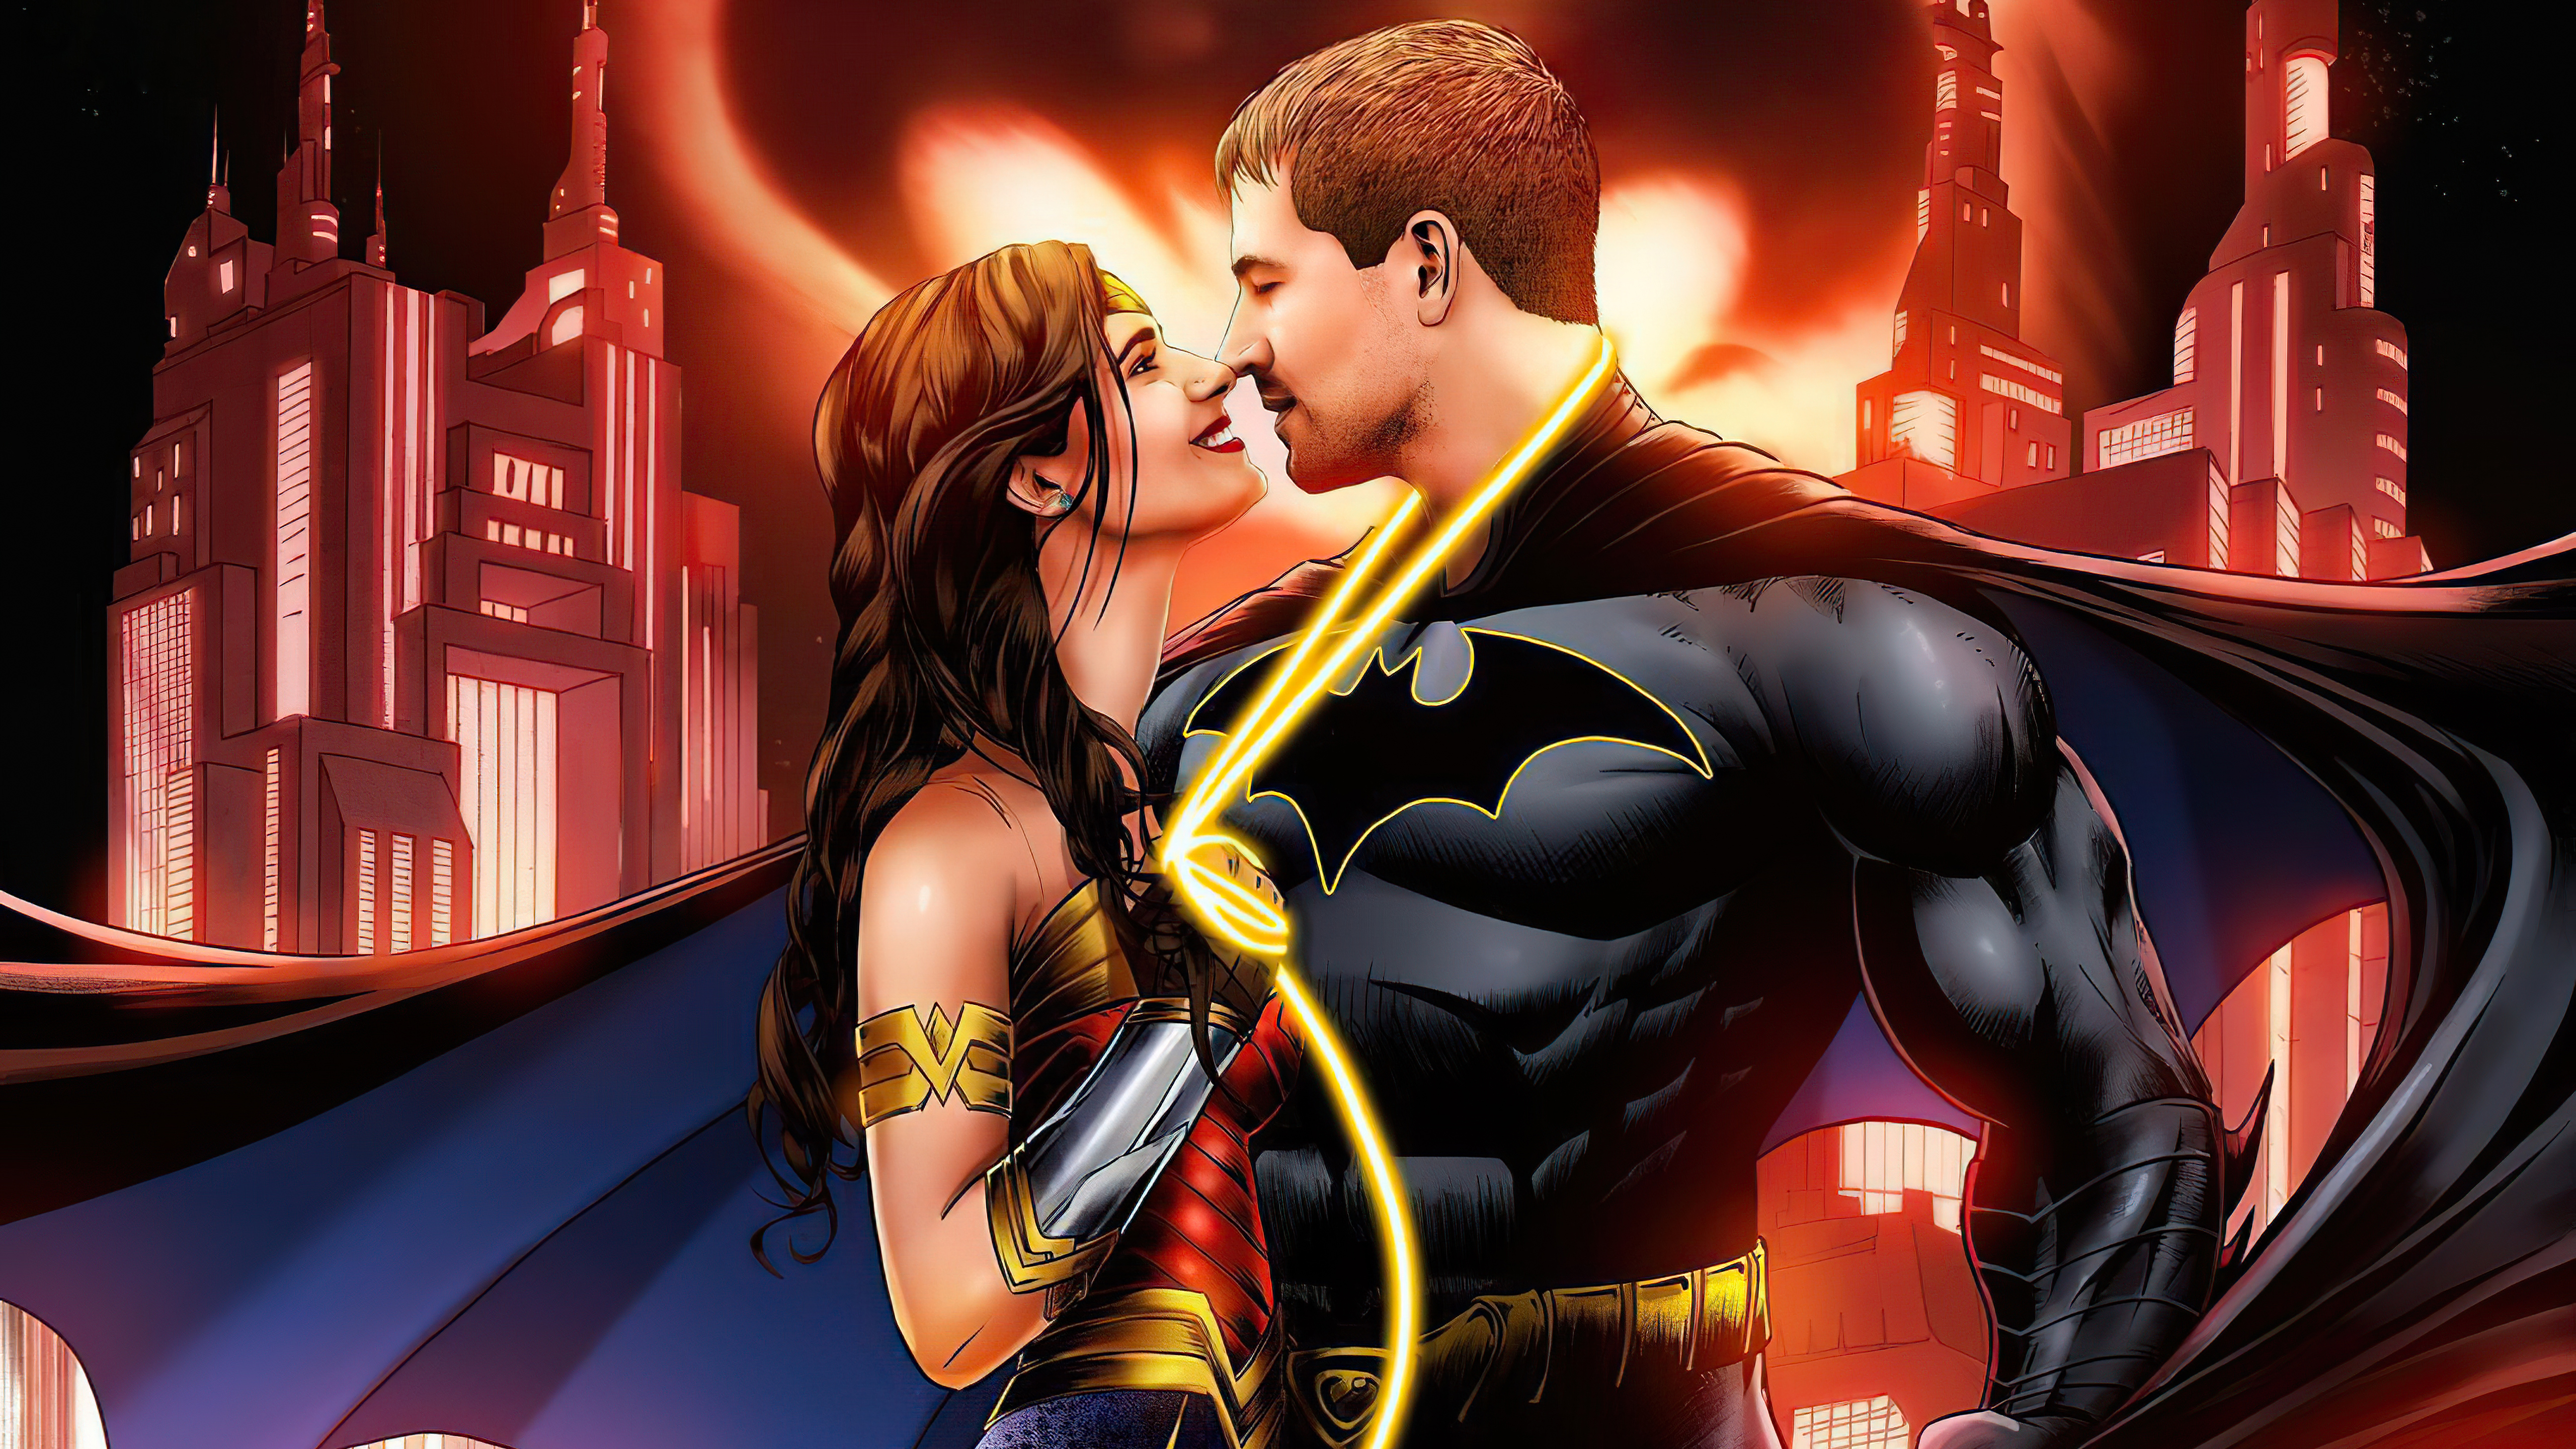 Woman batman romance and wonder Wonder Woman